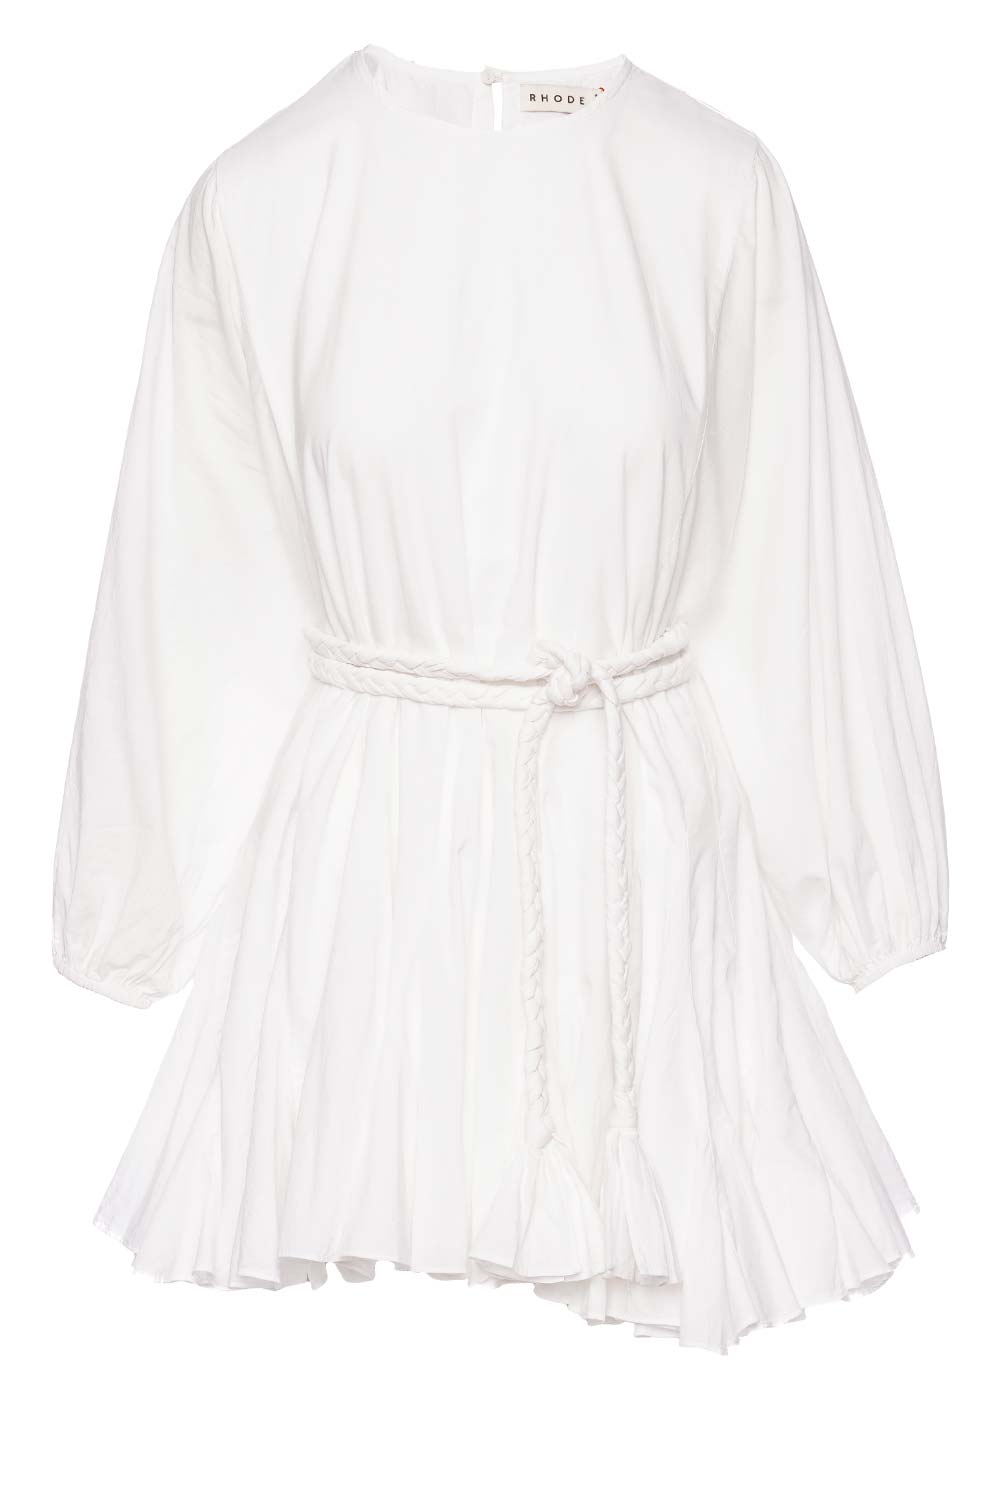 Rhode Ella White Belted Mini Dress